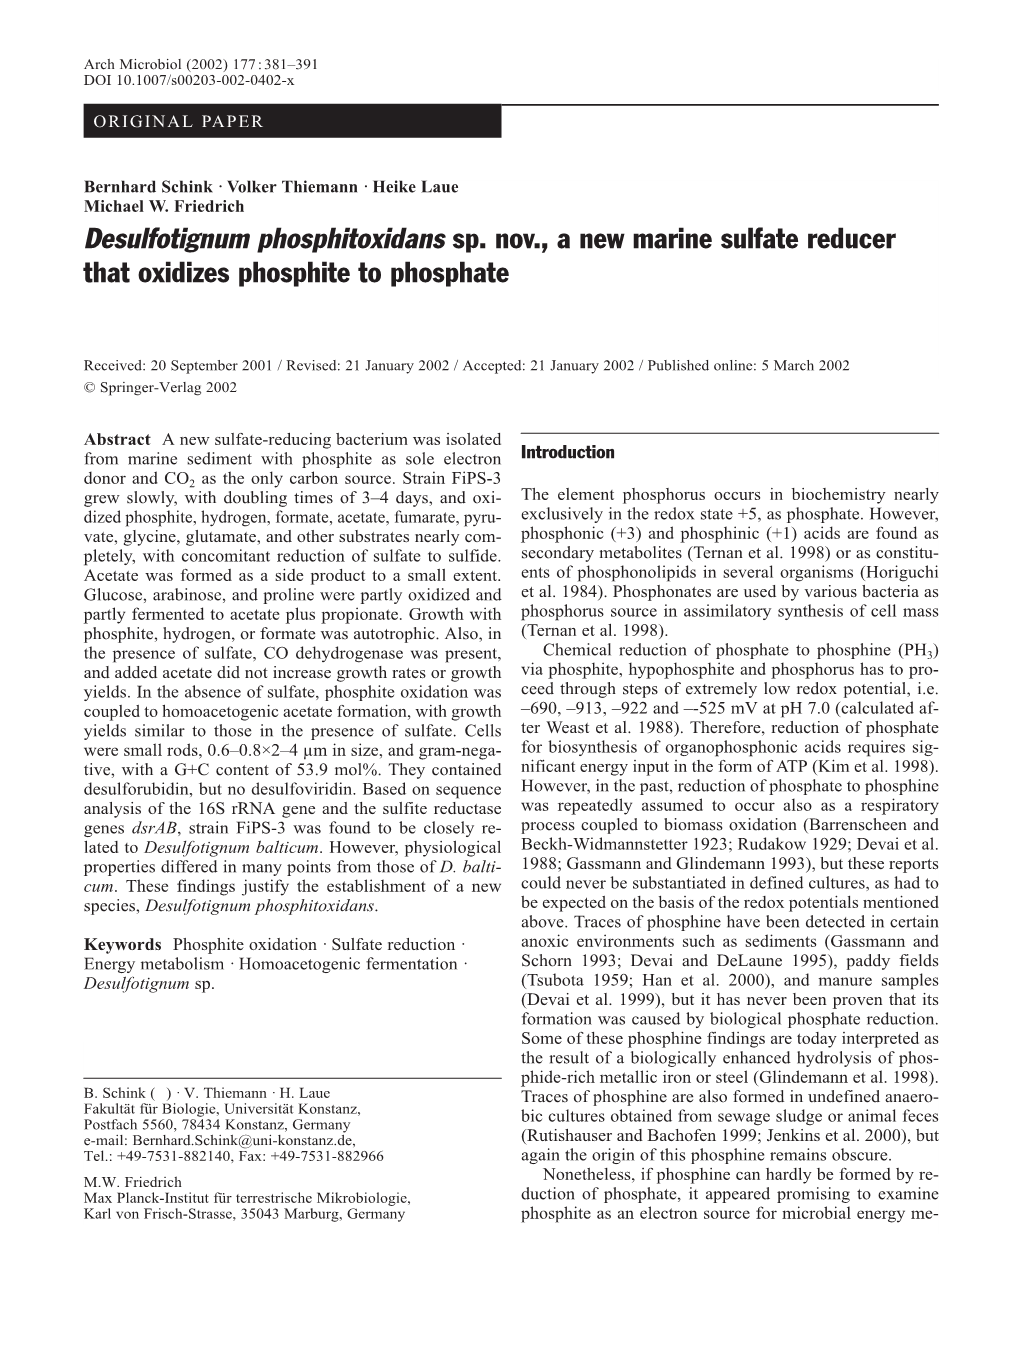 Desulfotignum Phosphitoxidans Sp. Nov., a New Marine Sulfate Reducer That Oxidizes Phosphite to Phosphate